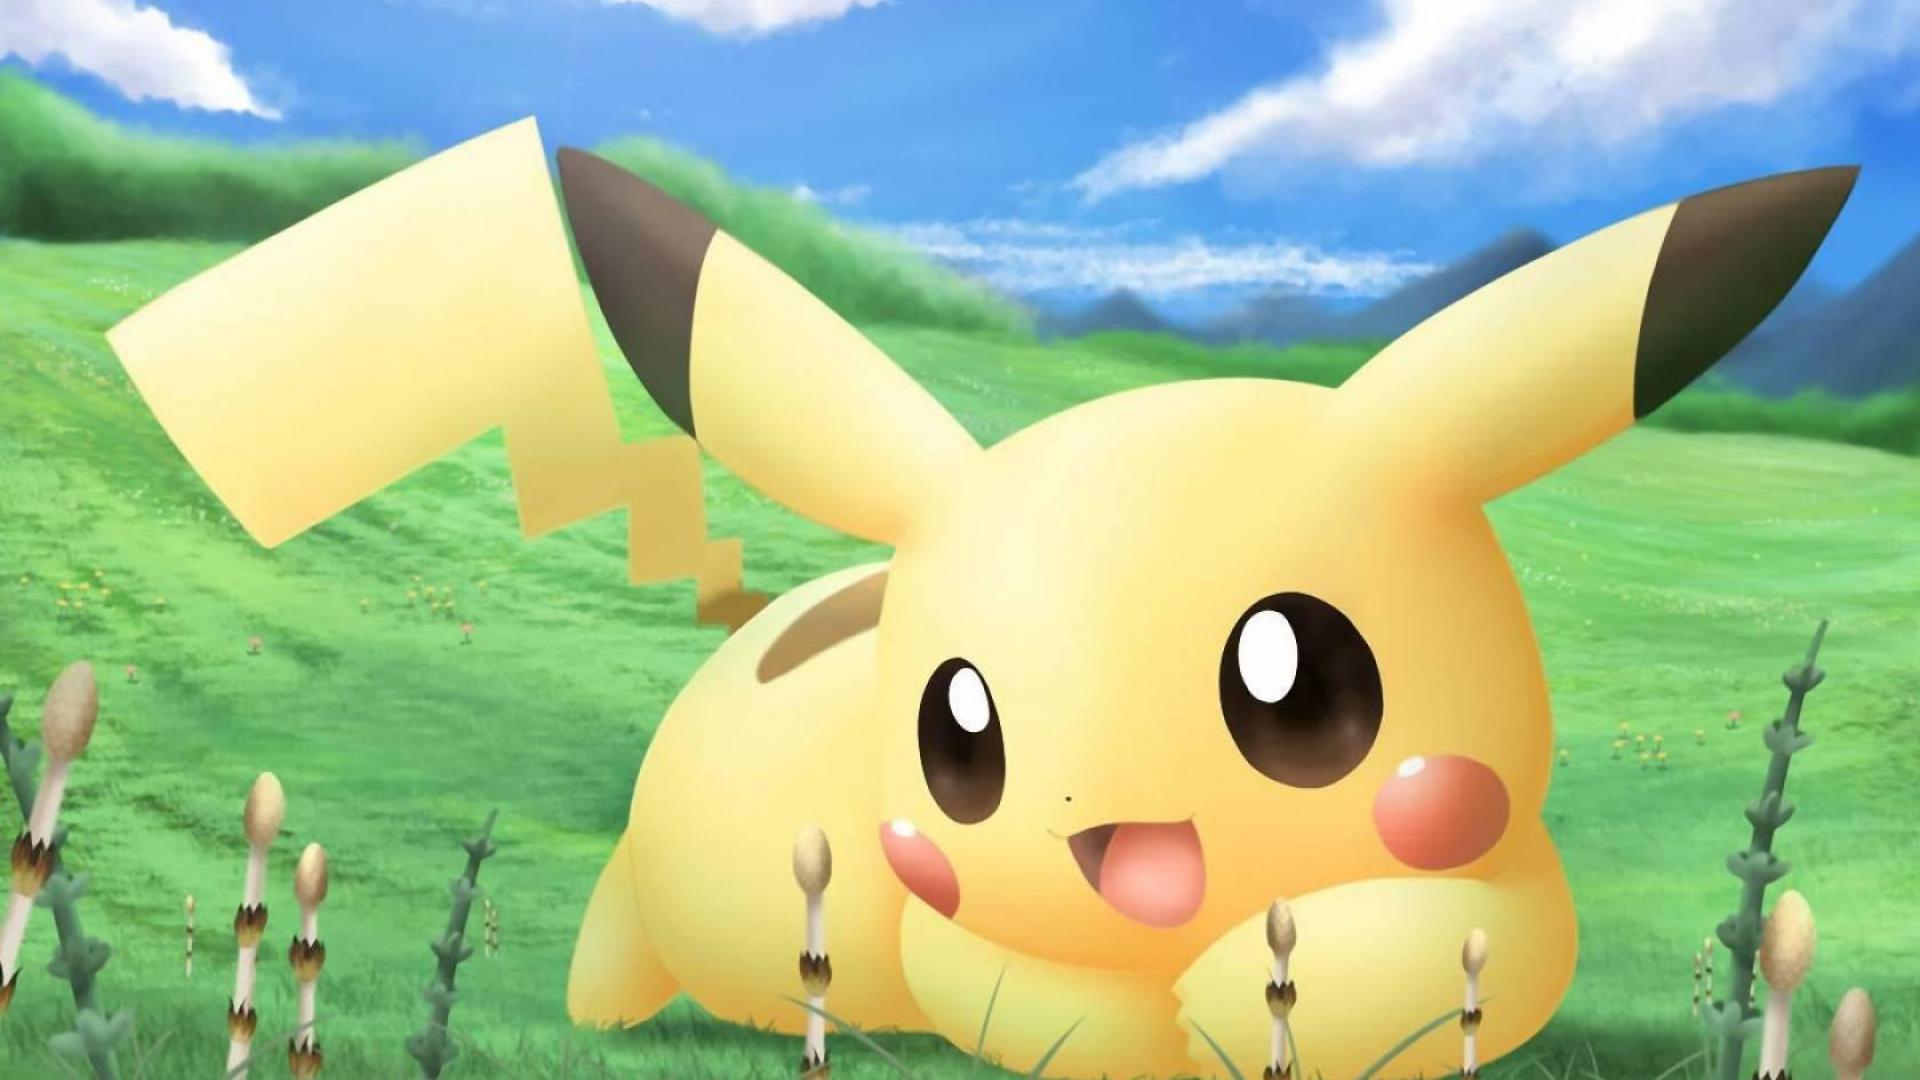 Kawaii Pikachu Pokemon Wallpaper Download